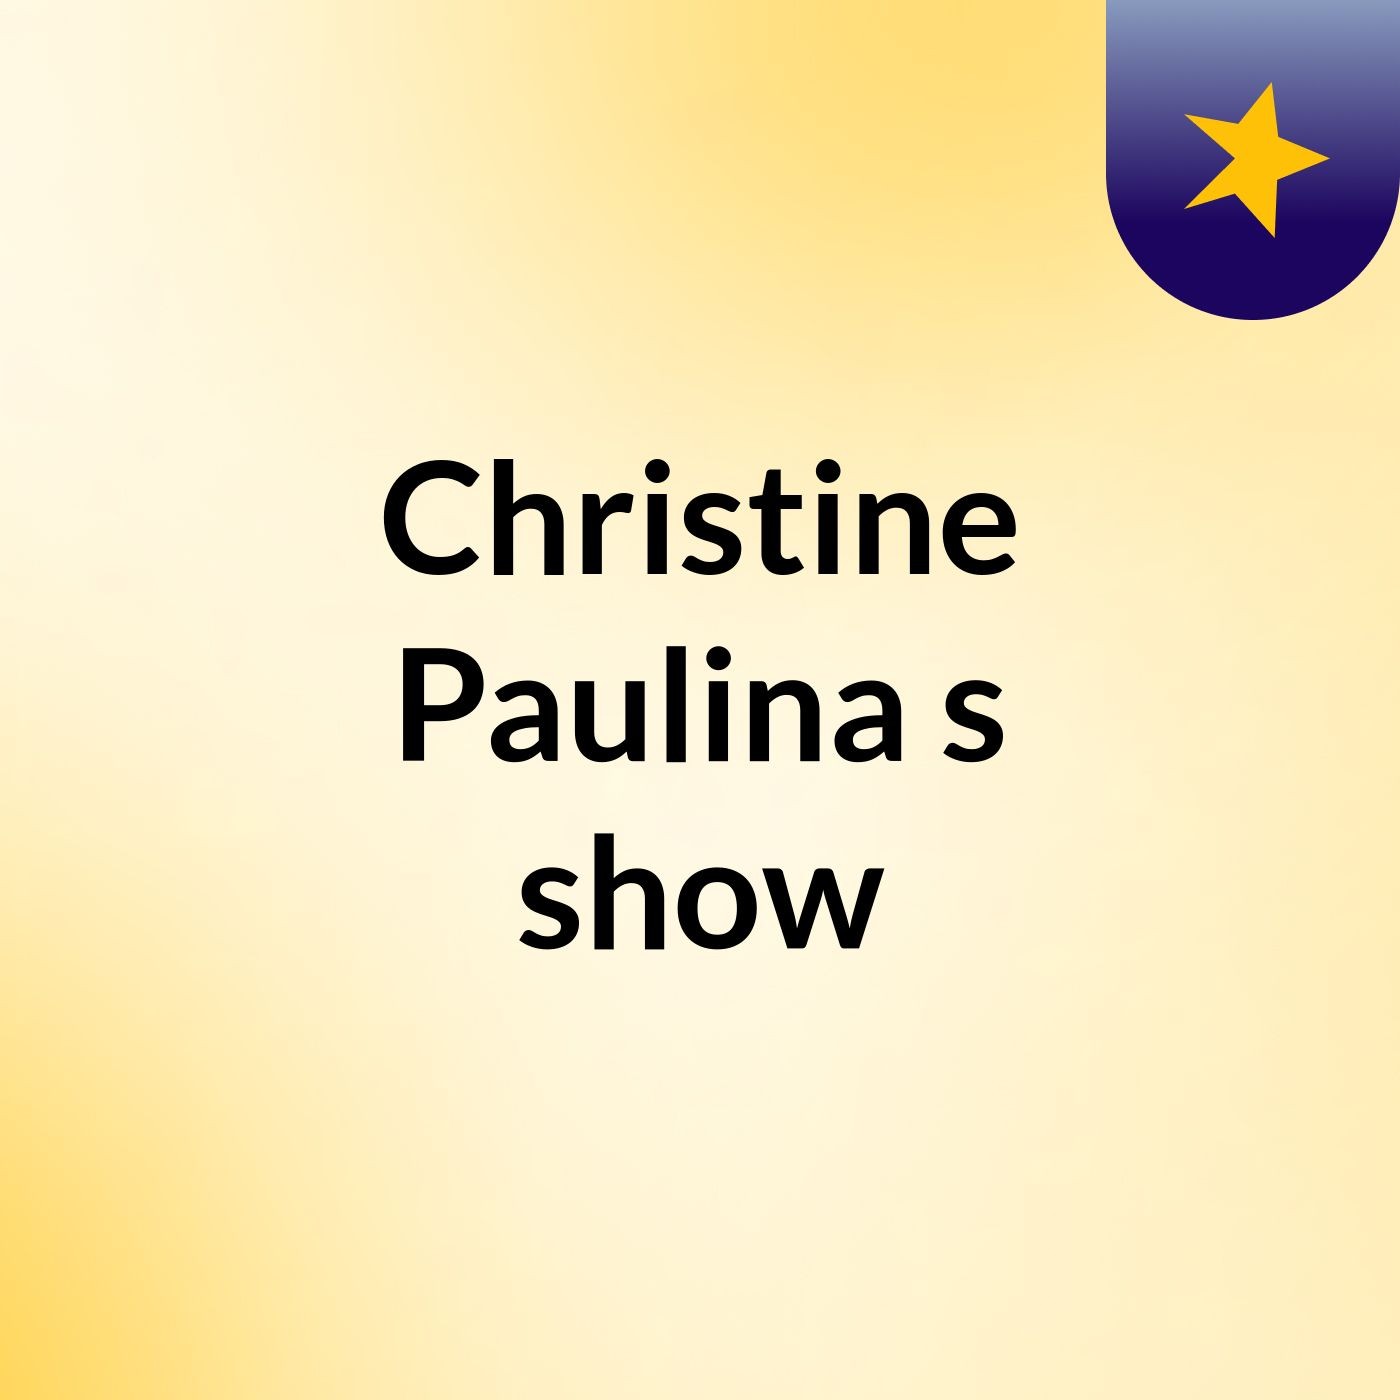 Christine Paulina's show